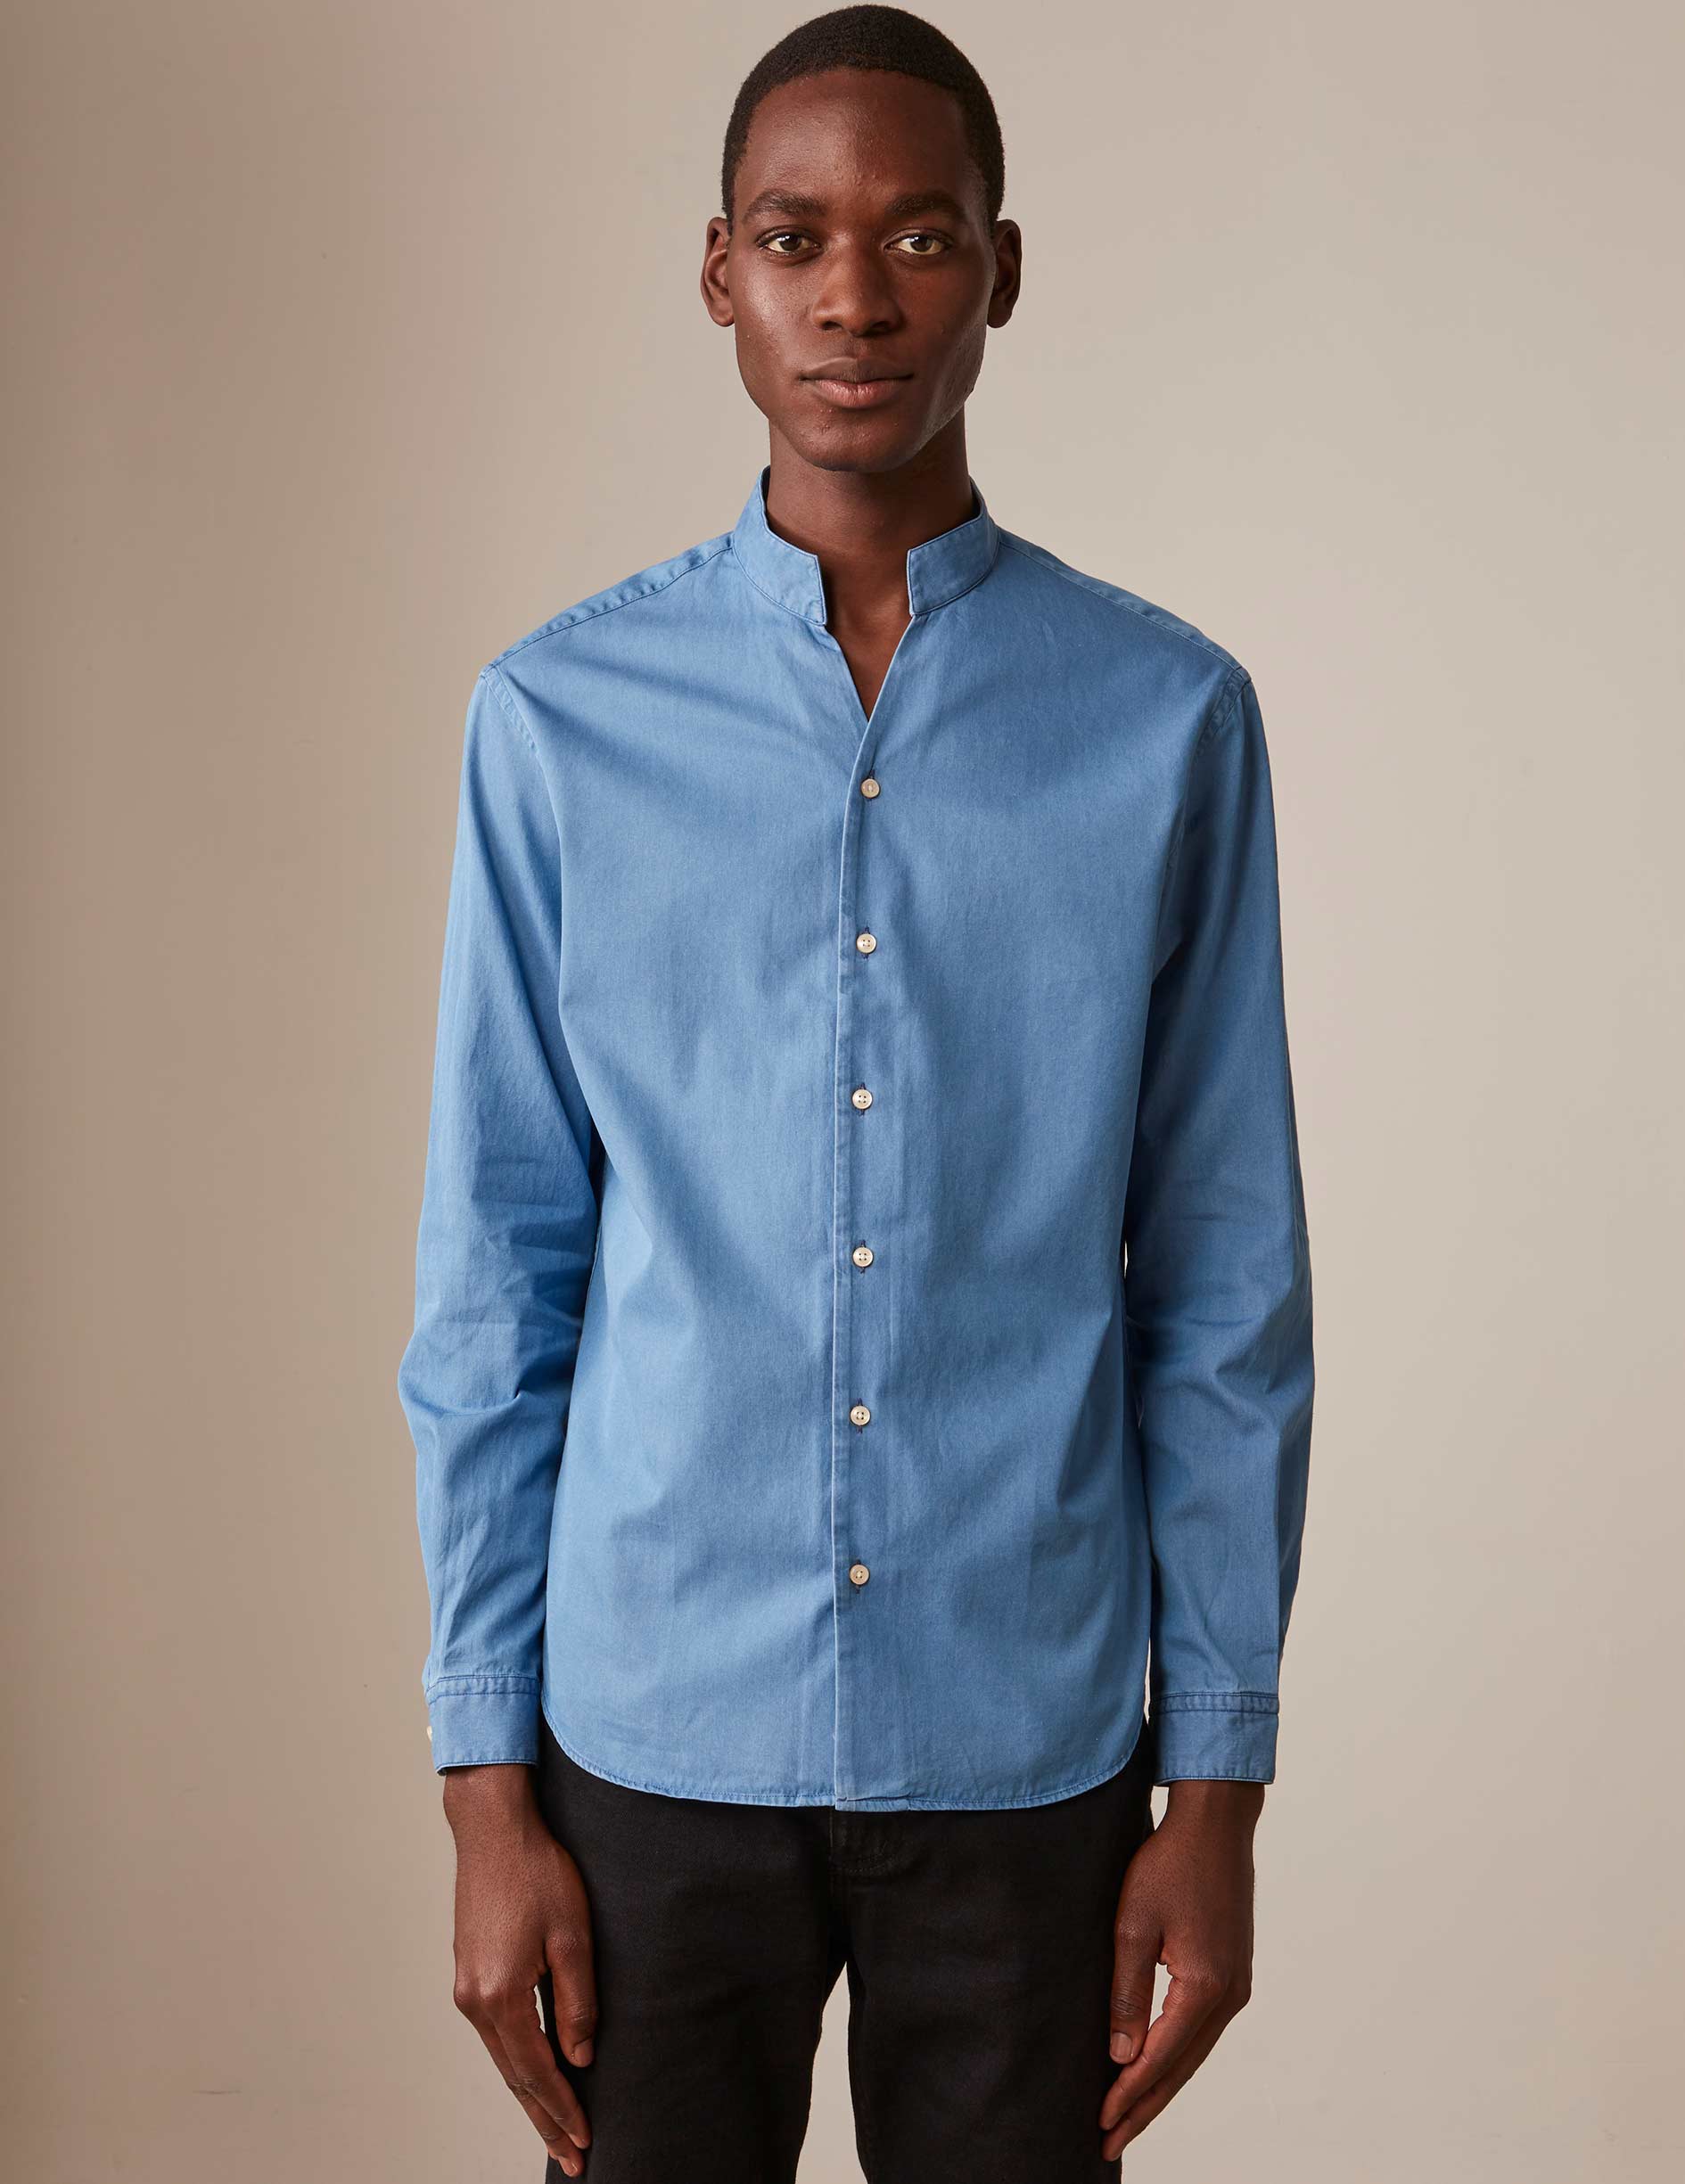 Light blue denim Carl shirt - Denim - Open straight Collar